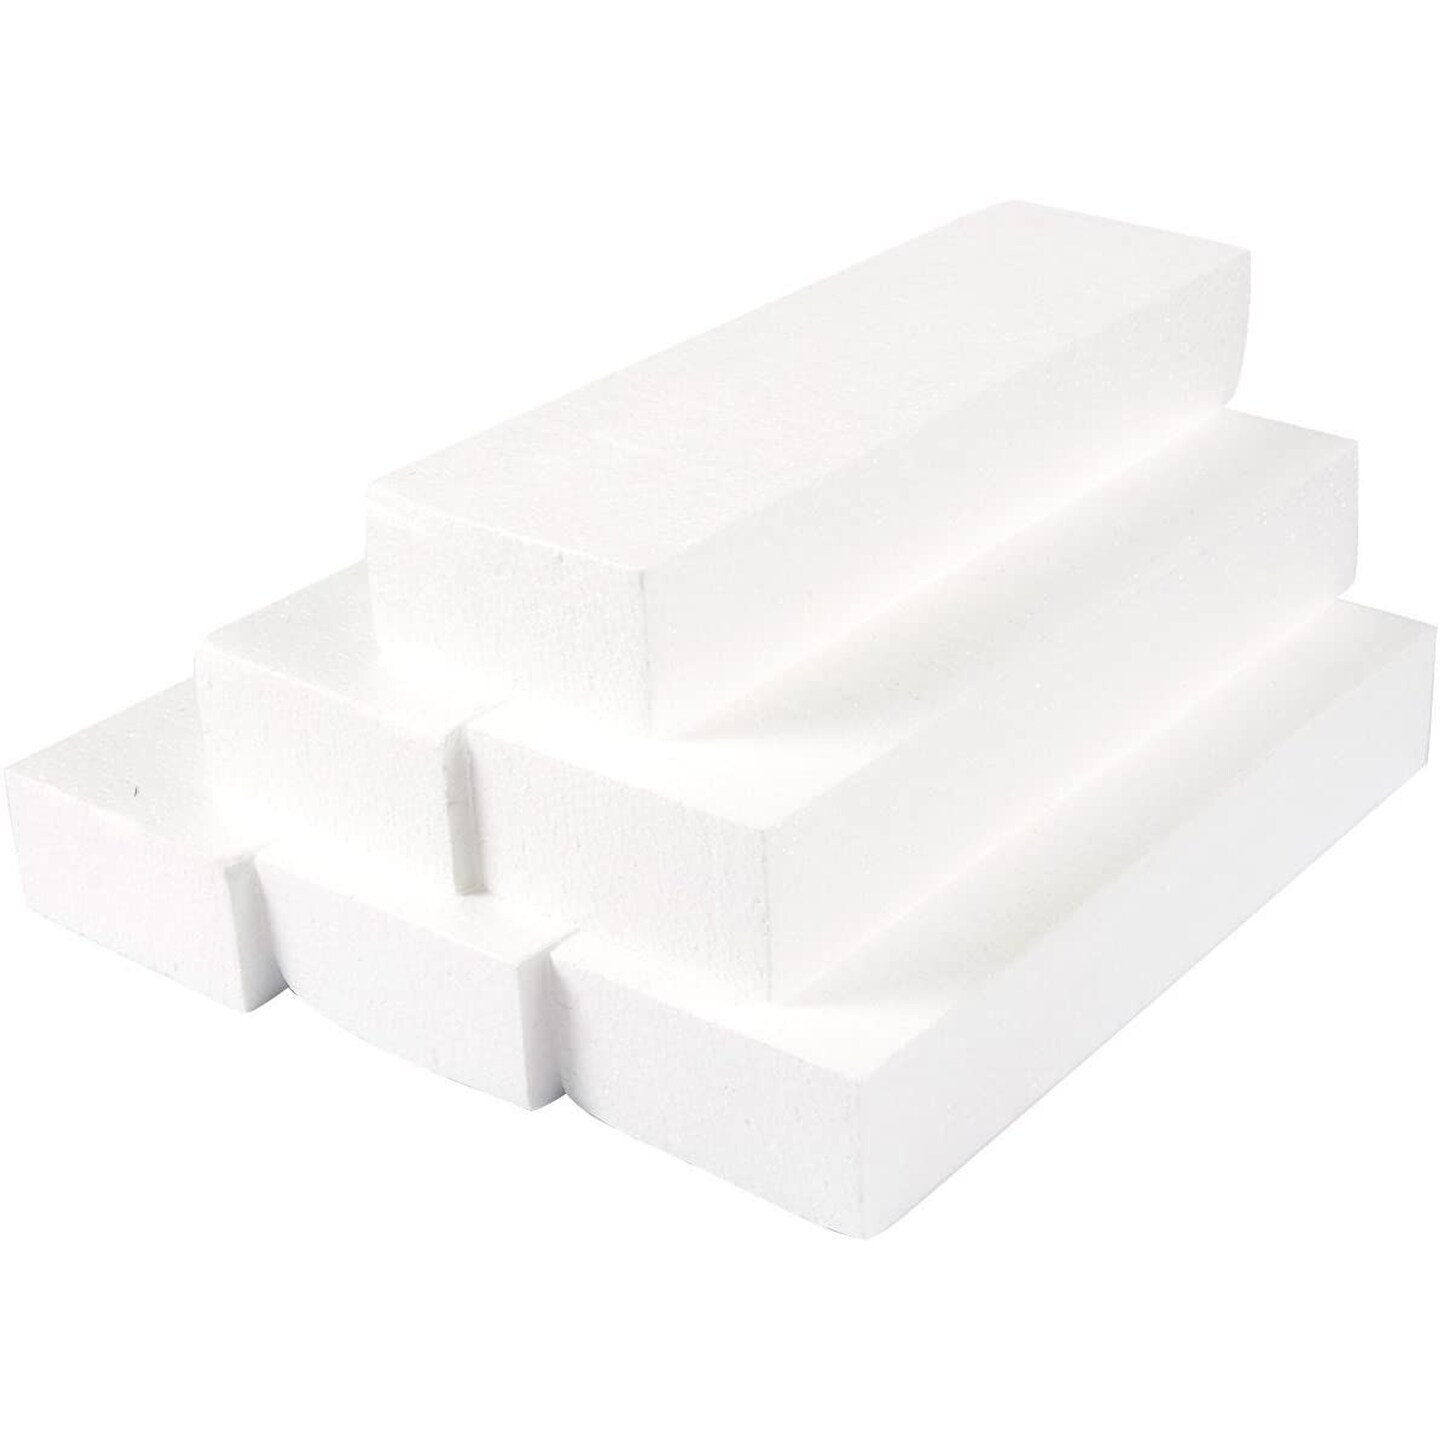  TEHAUX Sculpting DIY Foam White Foam Board Wedding Accessories  Polystyrene Squares for Crafting Polystyrene Brick Rectangles Square Cake  Dummy Foam for Crafts Foam Brick Shopping Cart Box